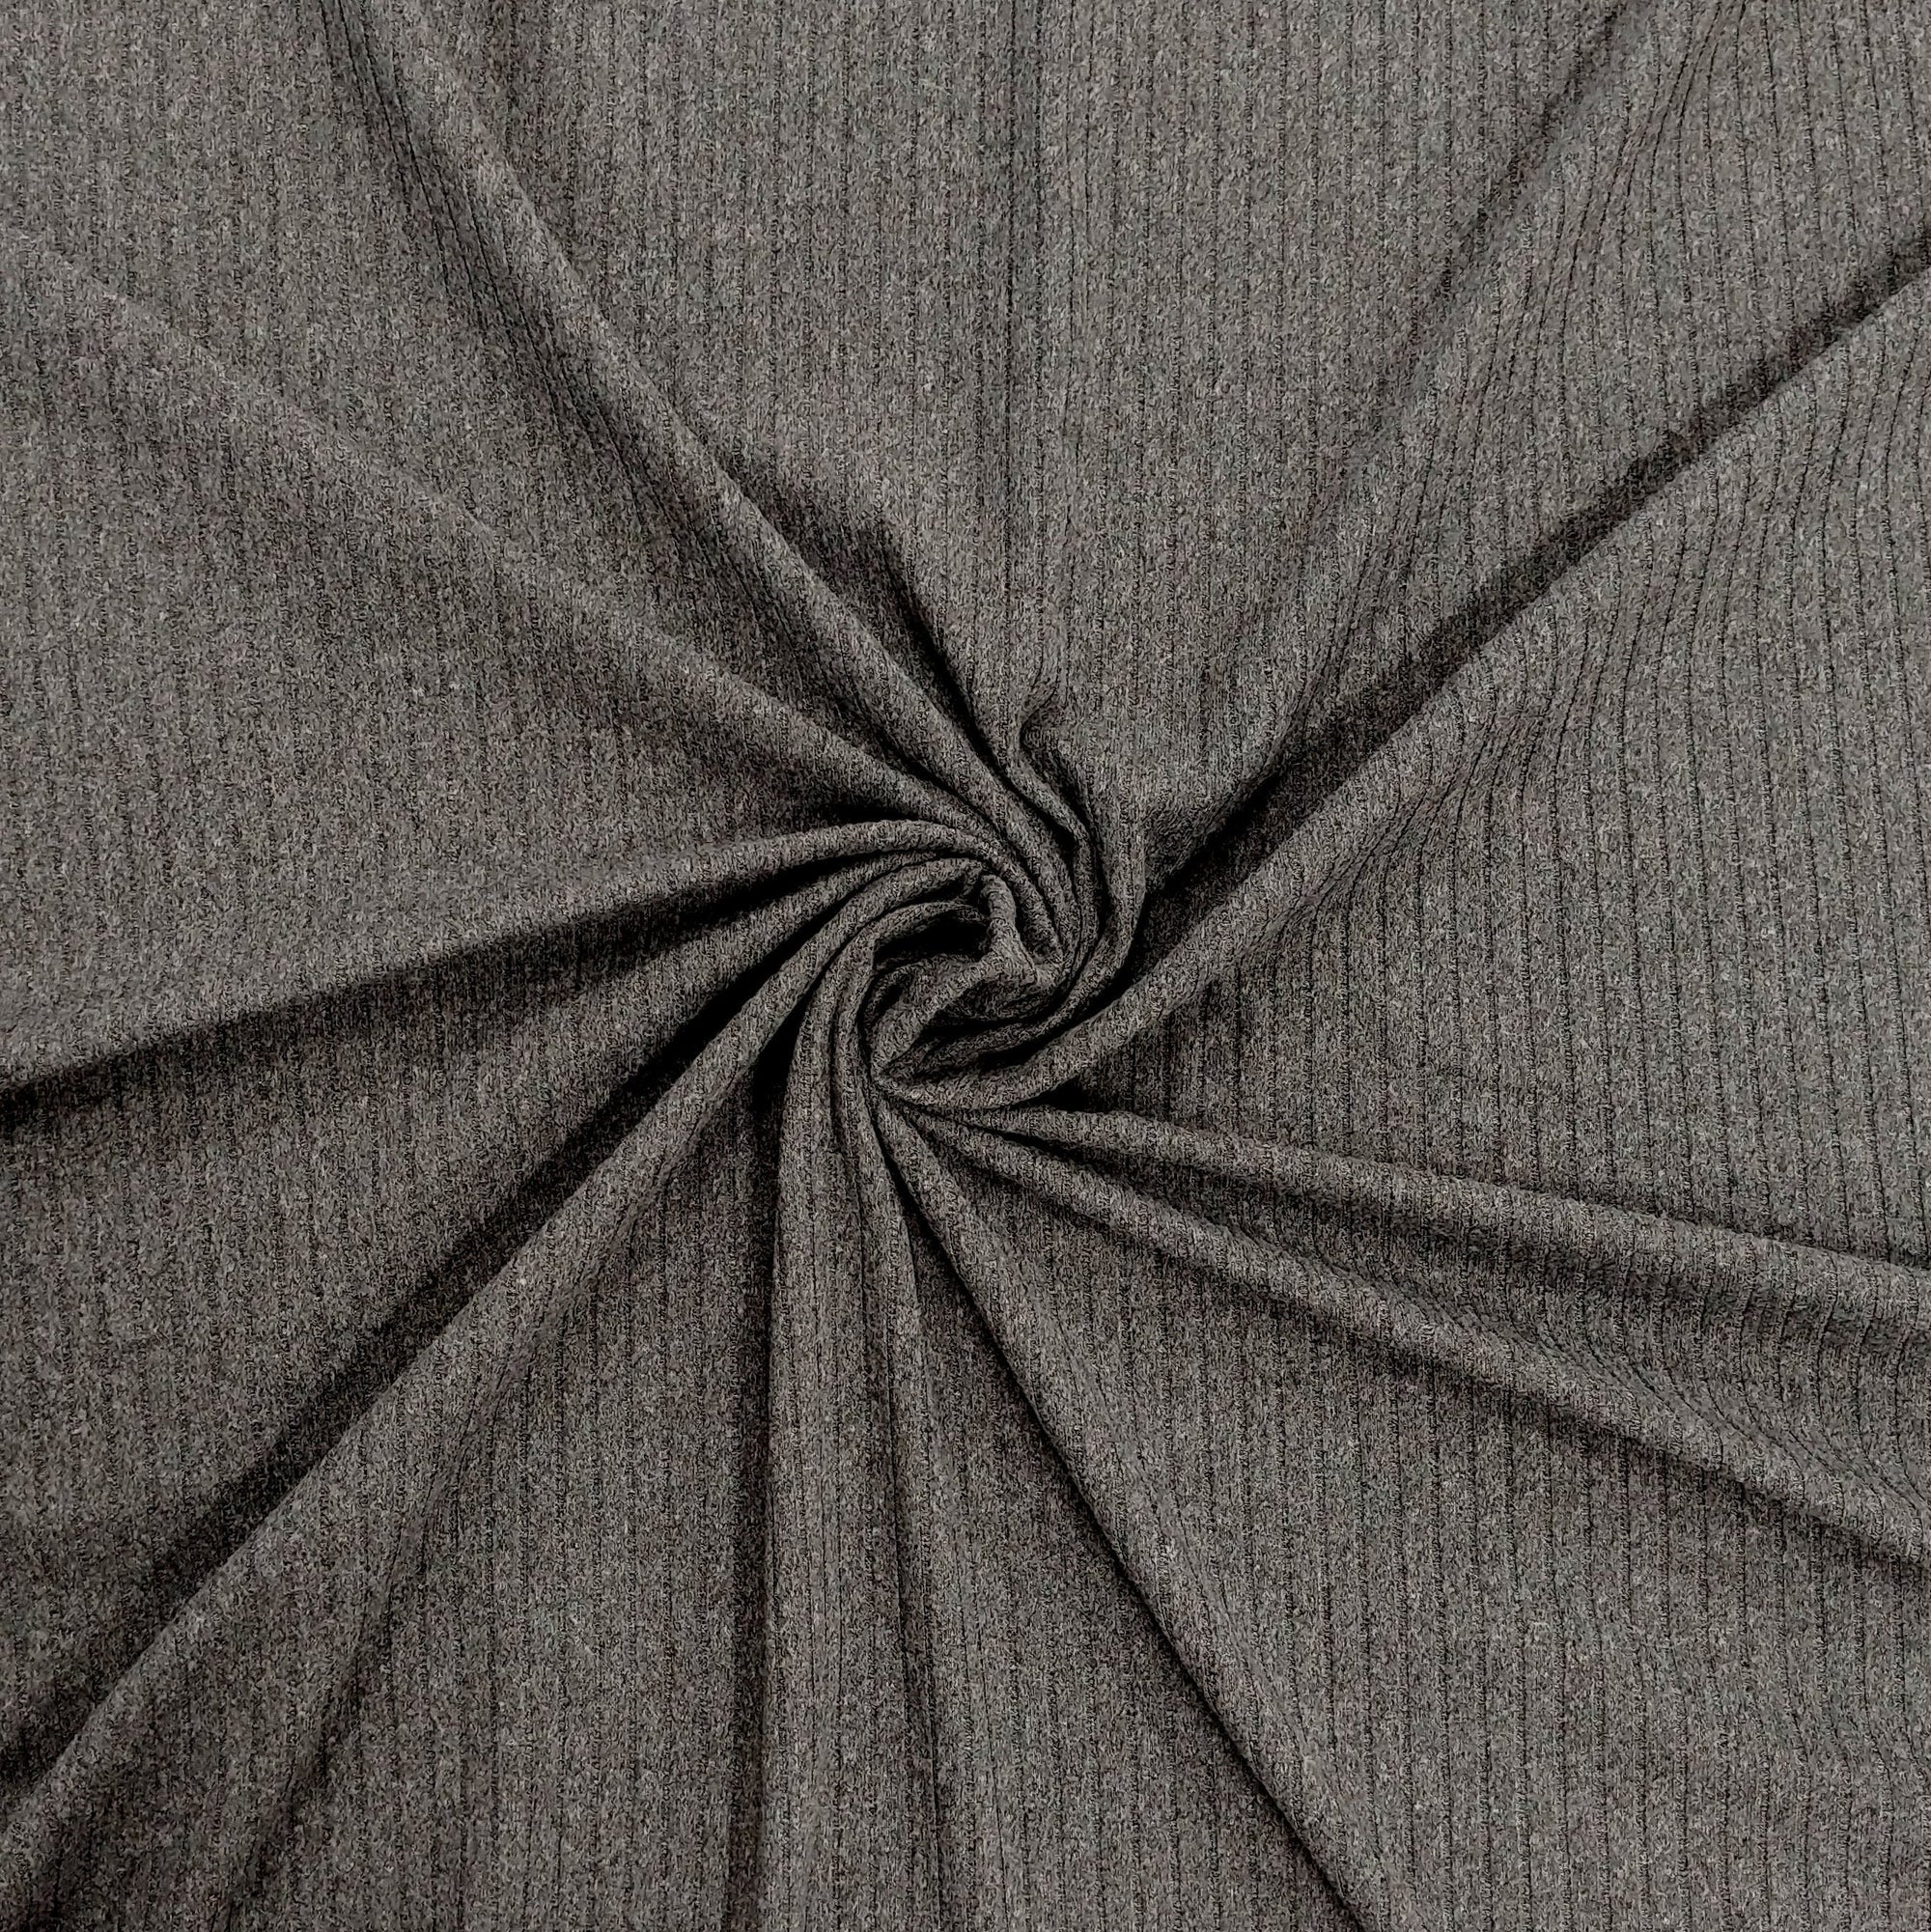 Solid Heathered Charcoal Grey Poly Spandex 4 Way Stretch 8x3 Rib Knit Fabric, Raspberry Creek Fabrics, watermarked, restored